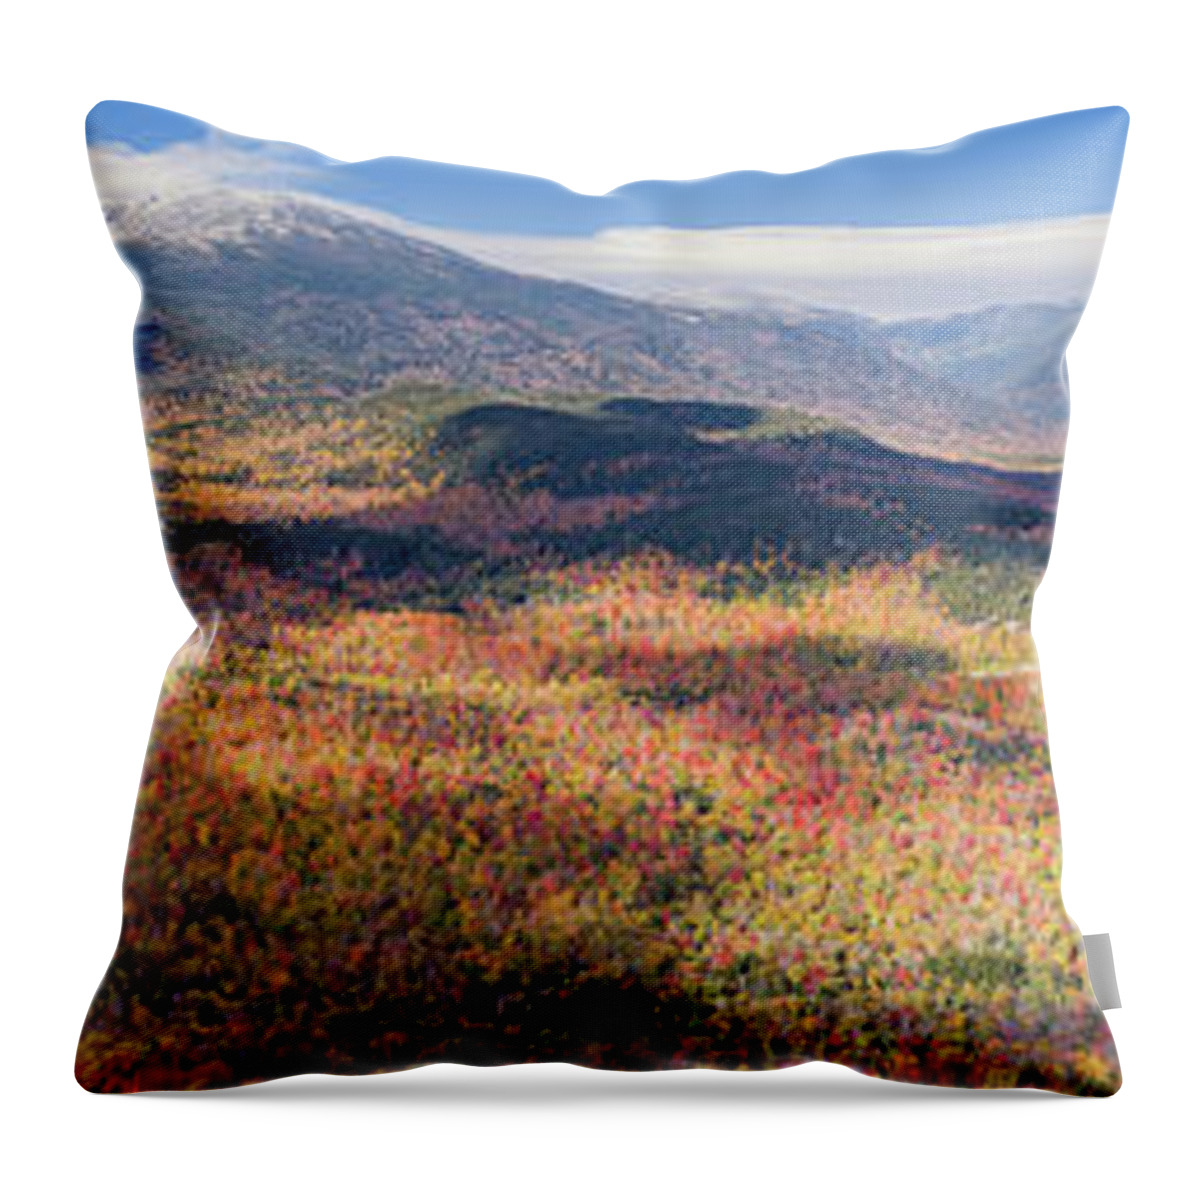 White Mountains Throw Pillow featuring the photograph Mount Washington Panorama by John Rowe